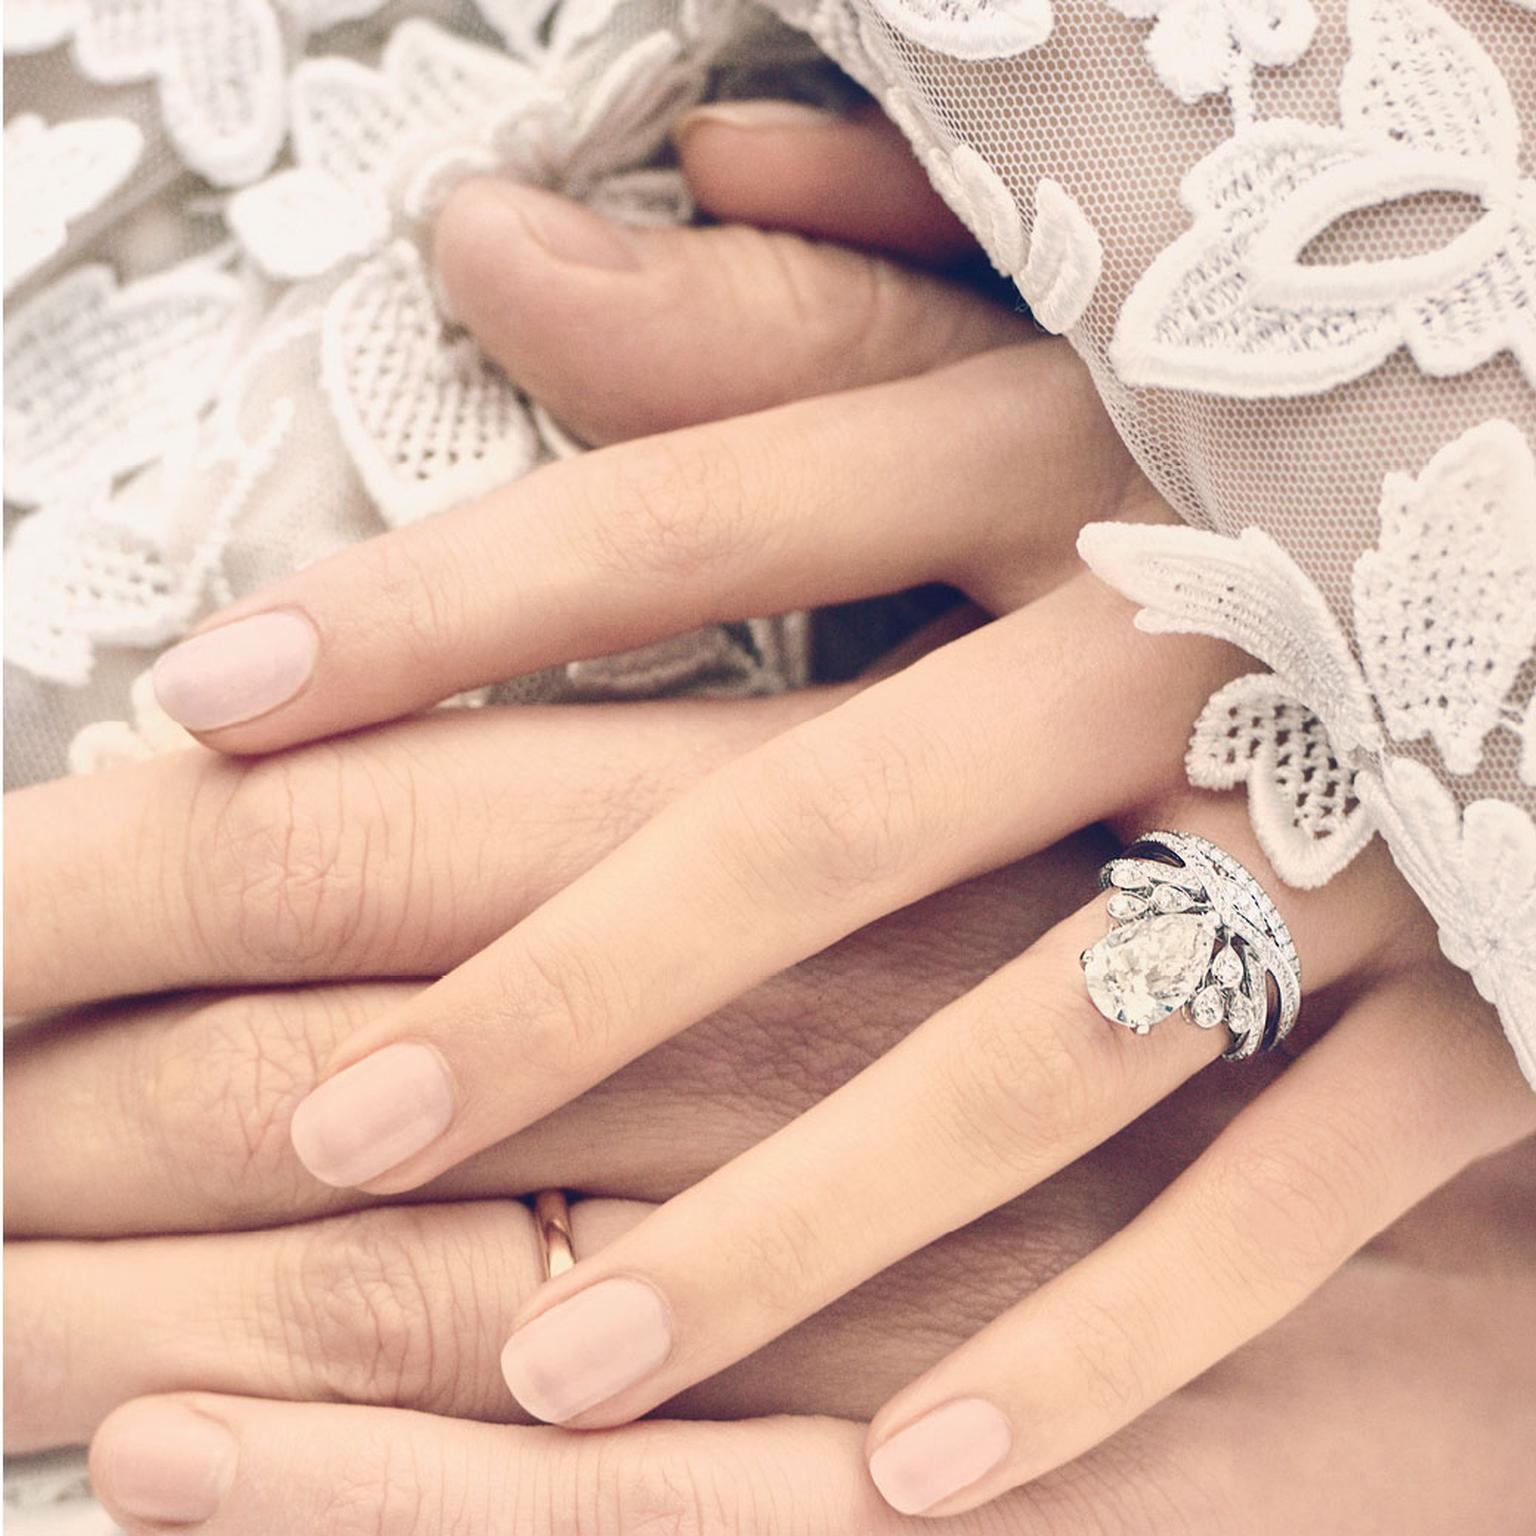 Chaumet Joséphine Aigrette Imperiale diamond engagement ring on model